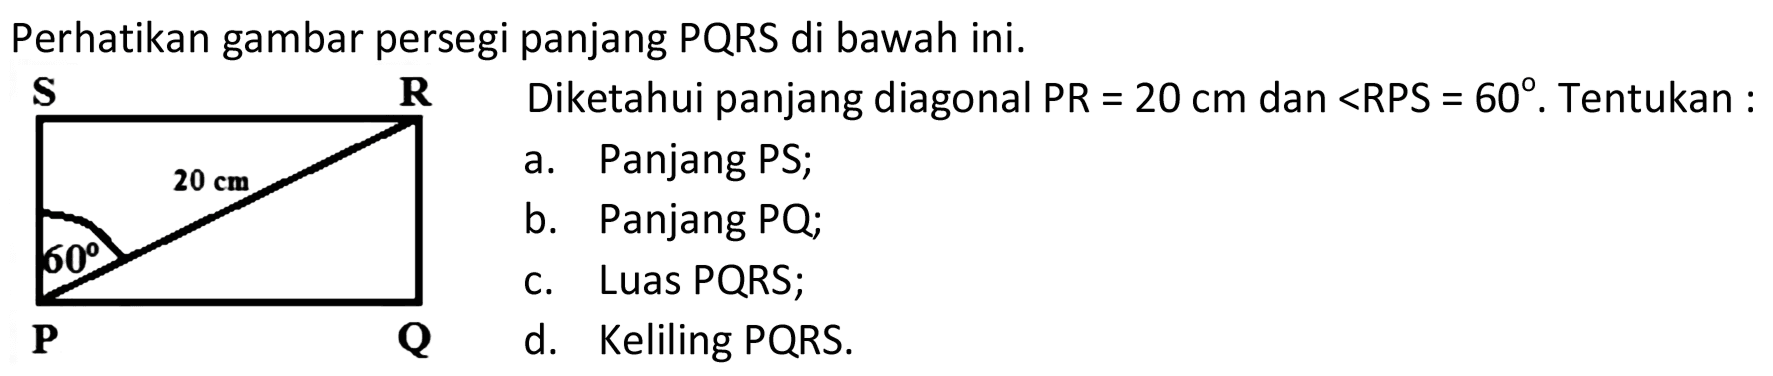 Perhatikan gambar persegi panjang PQRS di bawah ini. 
S R 20 cm 60 P Q 
Diketahui panjang diagonal PR = 20 cm dan sudut RPS = 60. Tentukan: 
a. Panjang PS; 
b. Panjang PQ; 
c. Luas PQRS; 
d. Keliling PQRS.